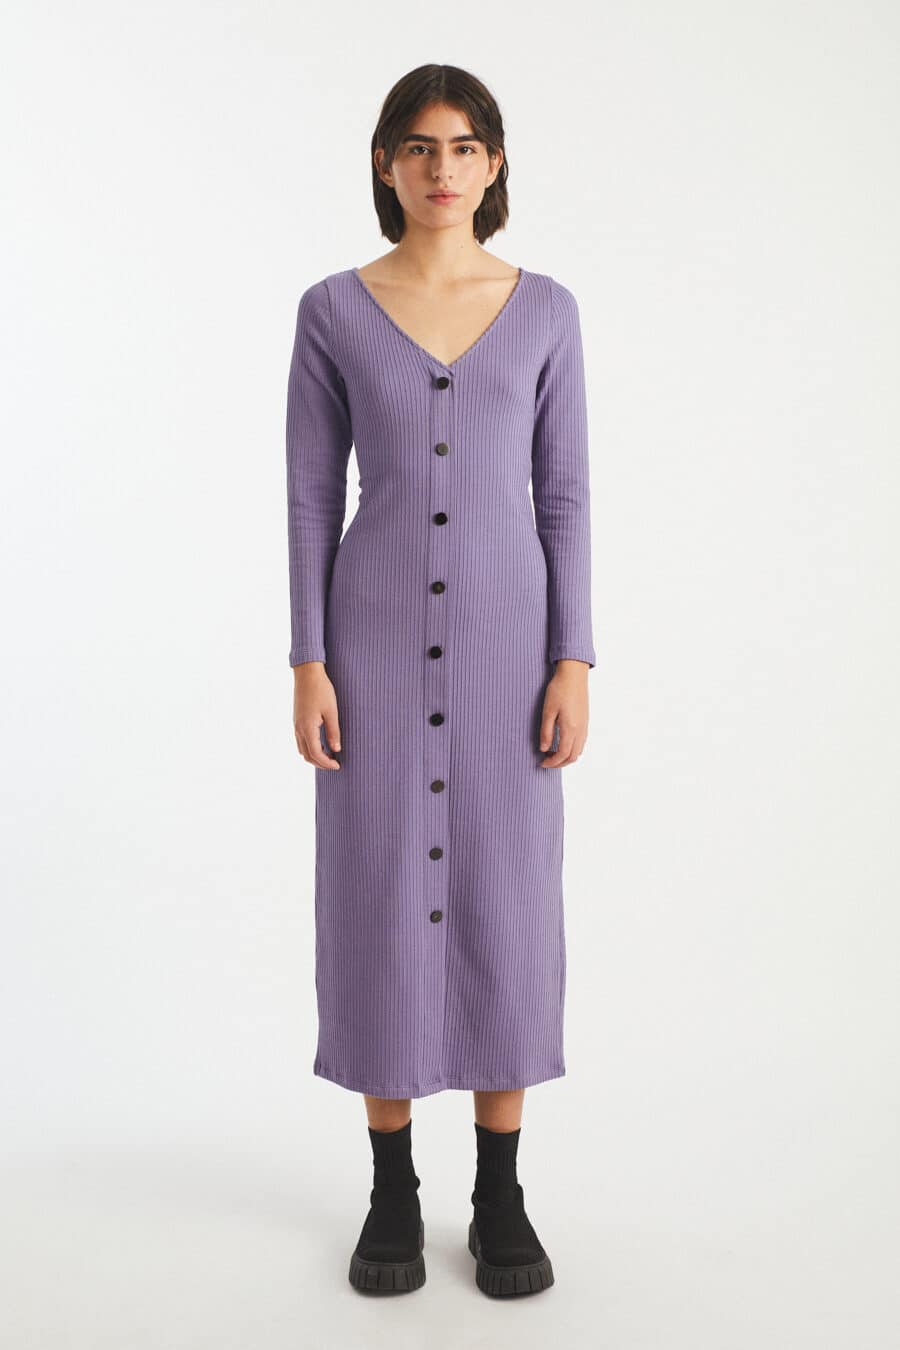 Hoffman Dress in Lilac